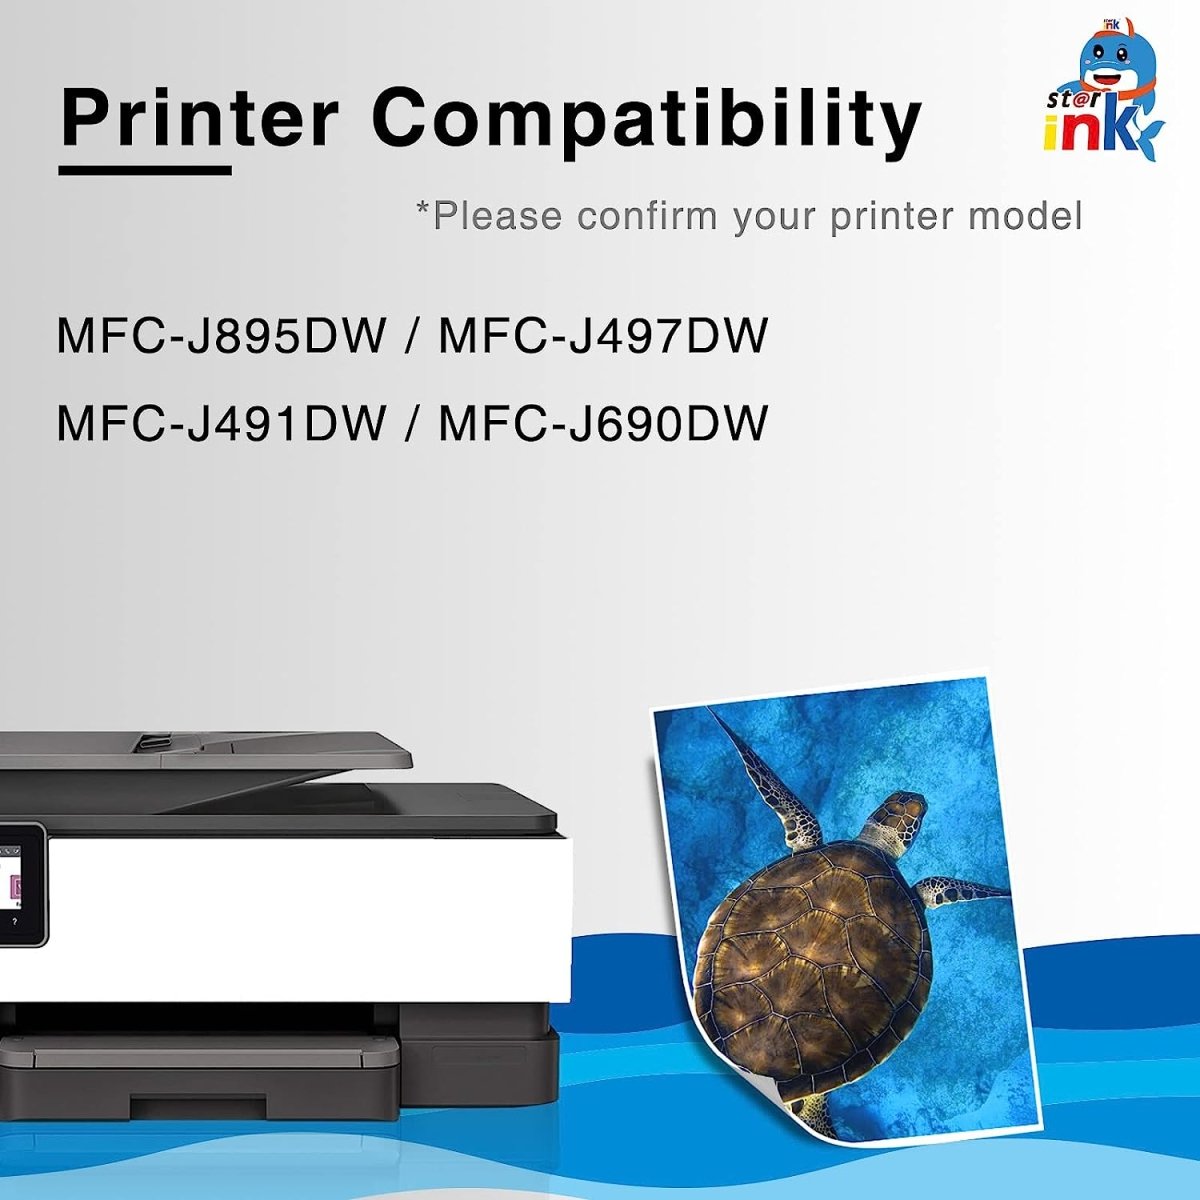 Compatible LC3013 Black Ink Cartridge for Brother Printer 4 Packs - Linford Office:Printer Ink & Toner Cartridge